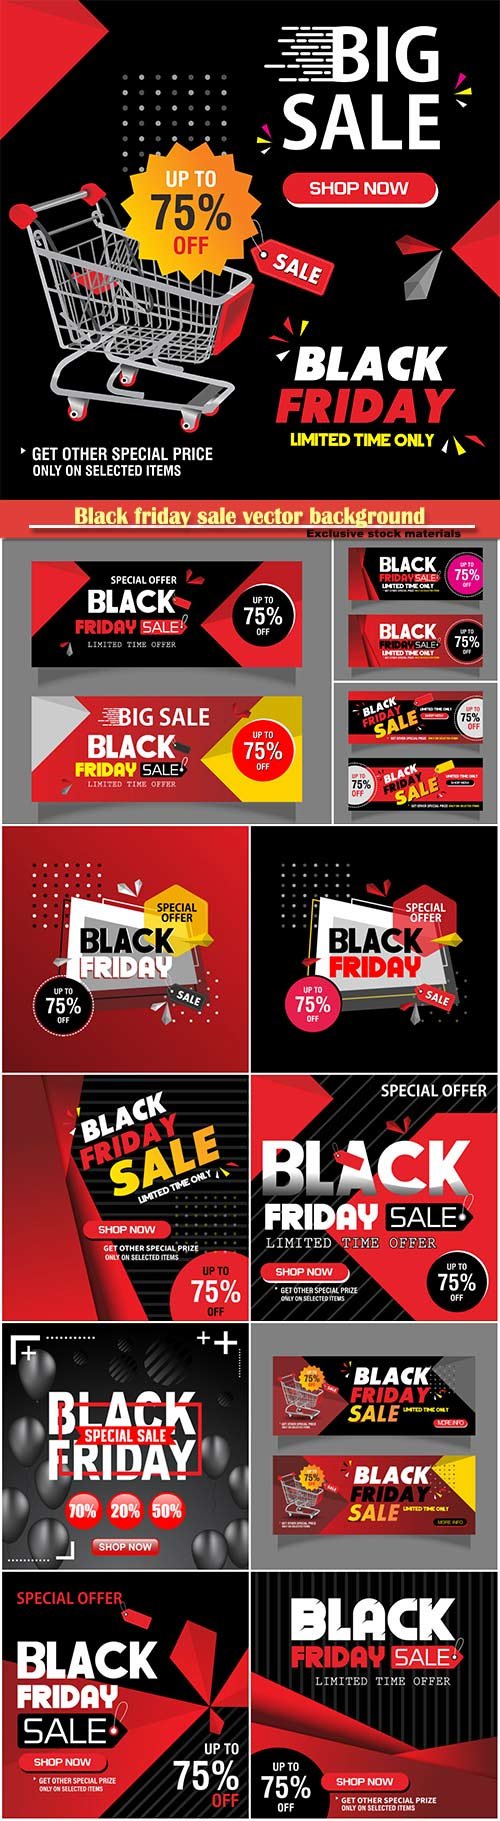 Black friday sale vector background # 4